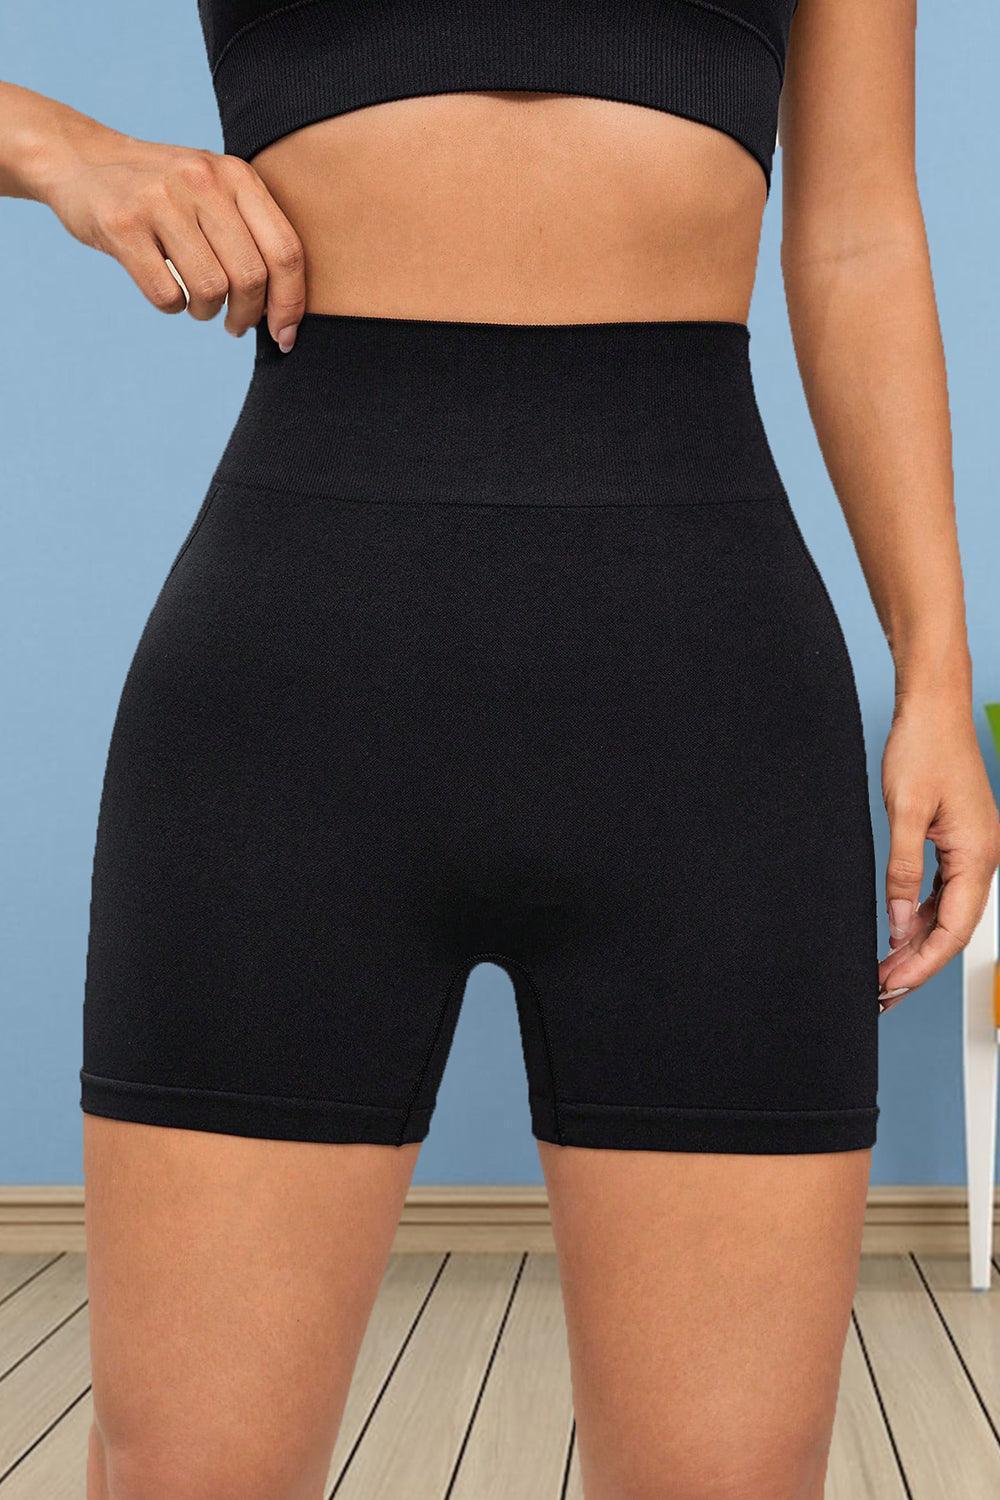 Ideal Fit Wide Waistband Black Gym Shorts - MXSTUDIO.COM